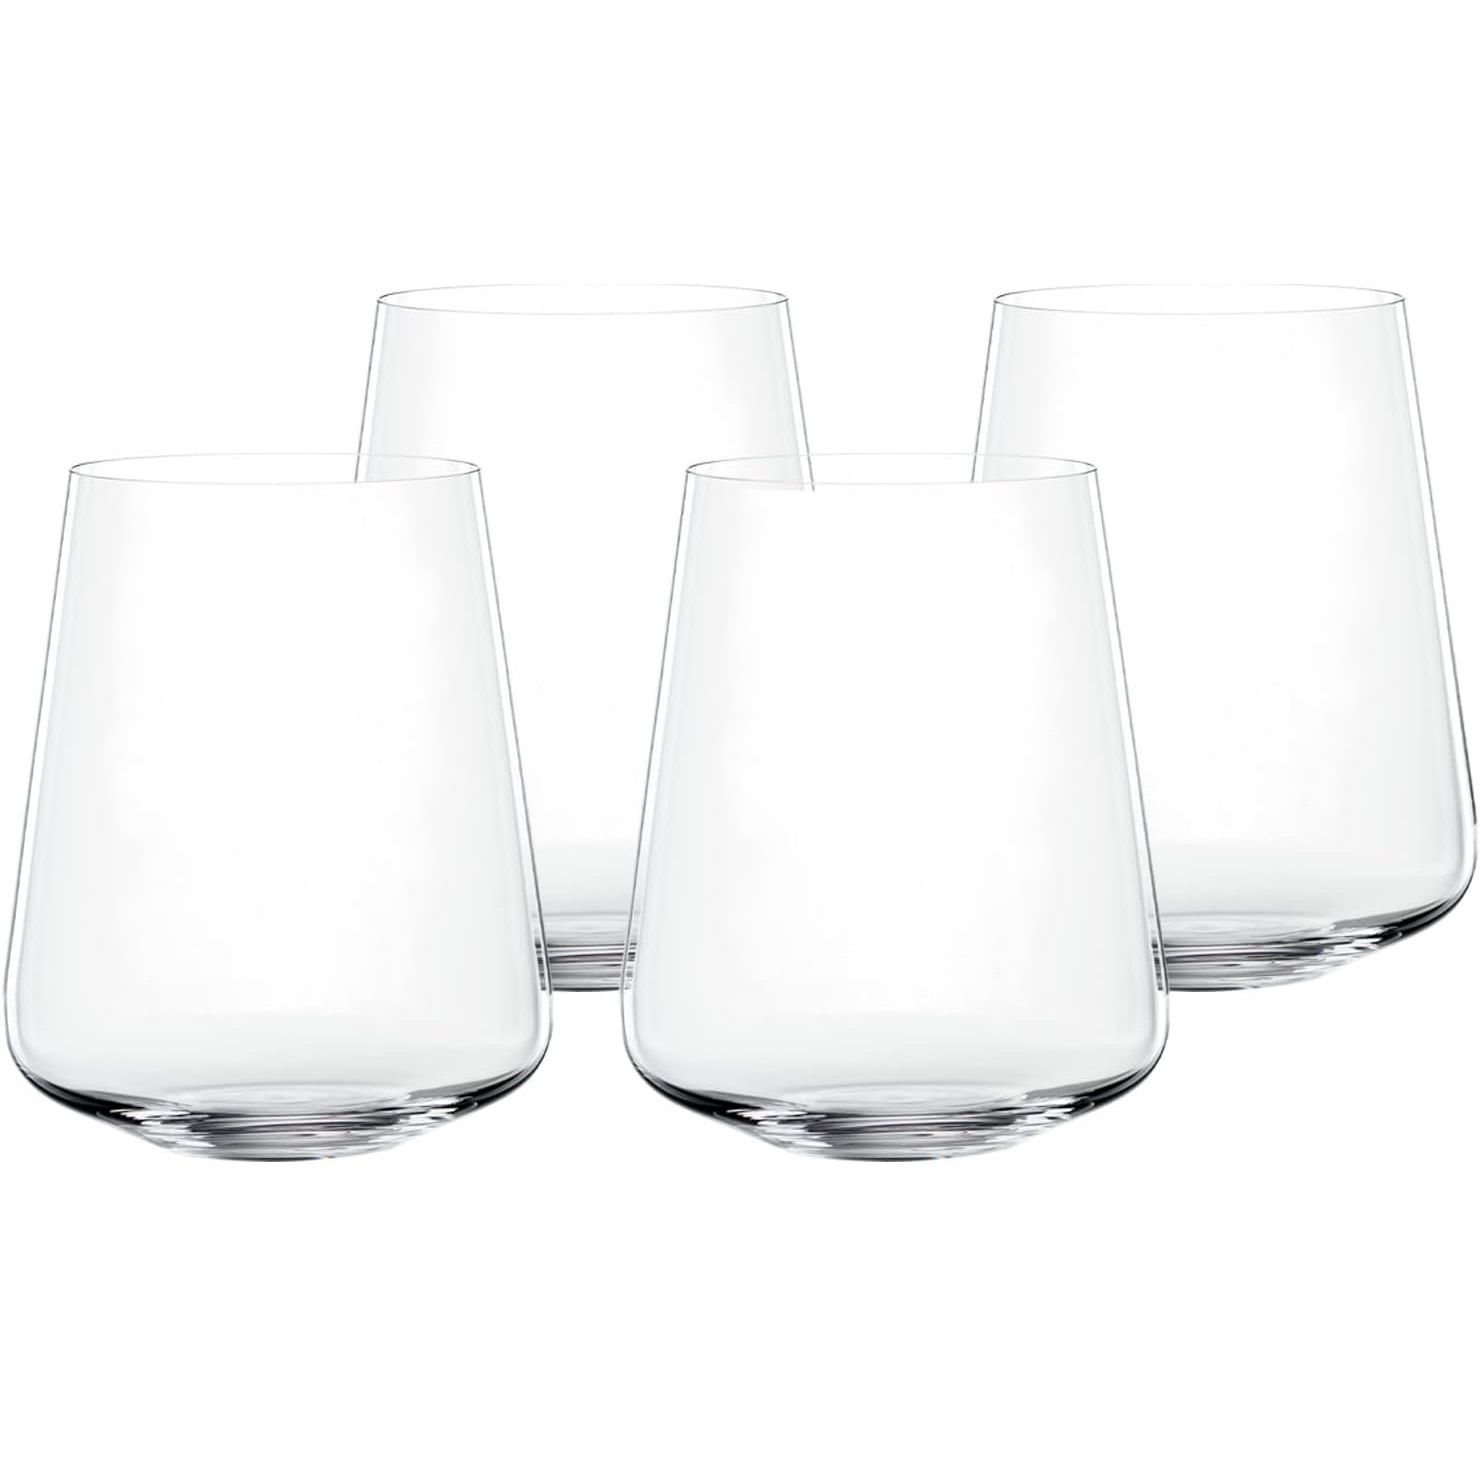 4 бокала для коктейлей Spiegelau Definition Soft Drink Tumbler 490 мл (арт. 1350179)